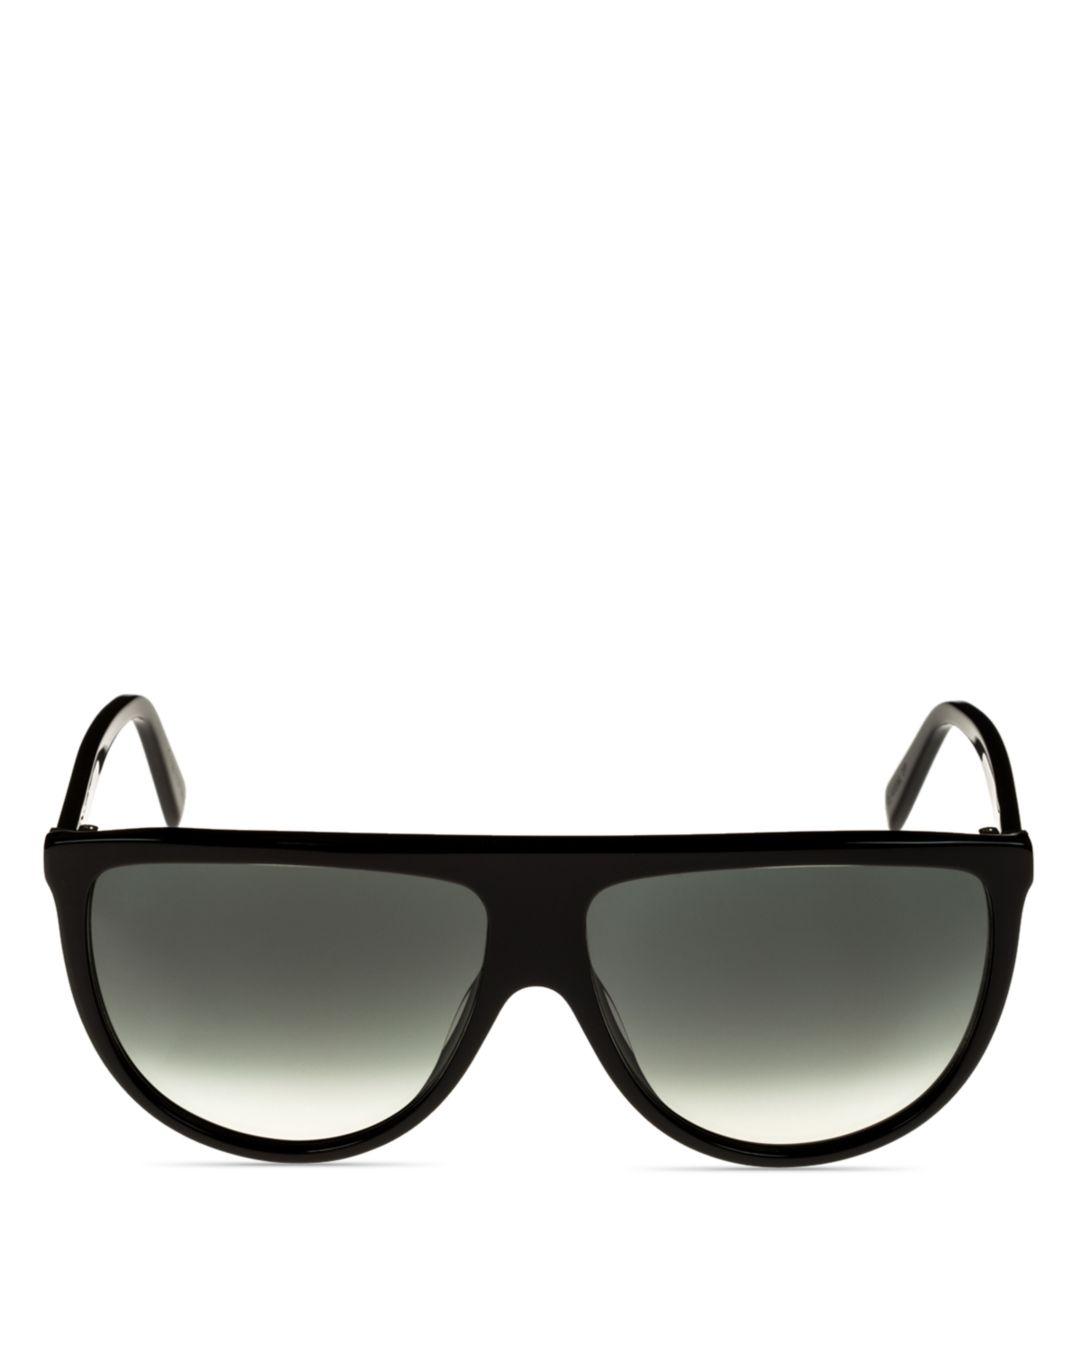 Celine Women's Flat Top Aviator Sunglasses in Black Gold (Black) - Lyst